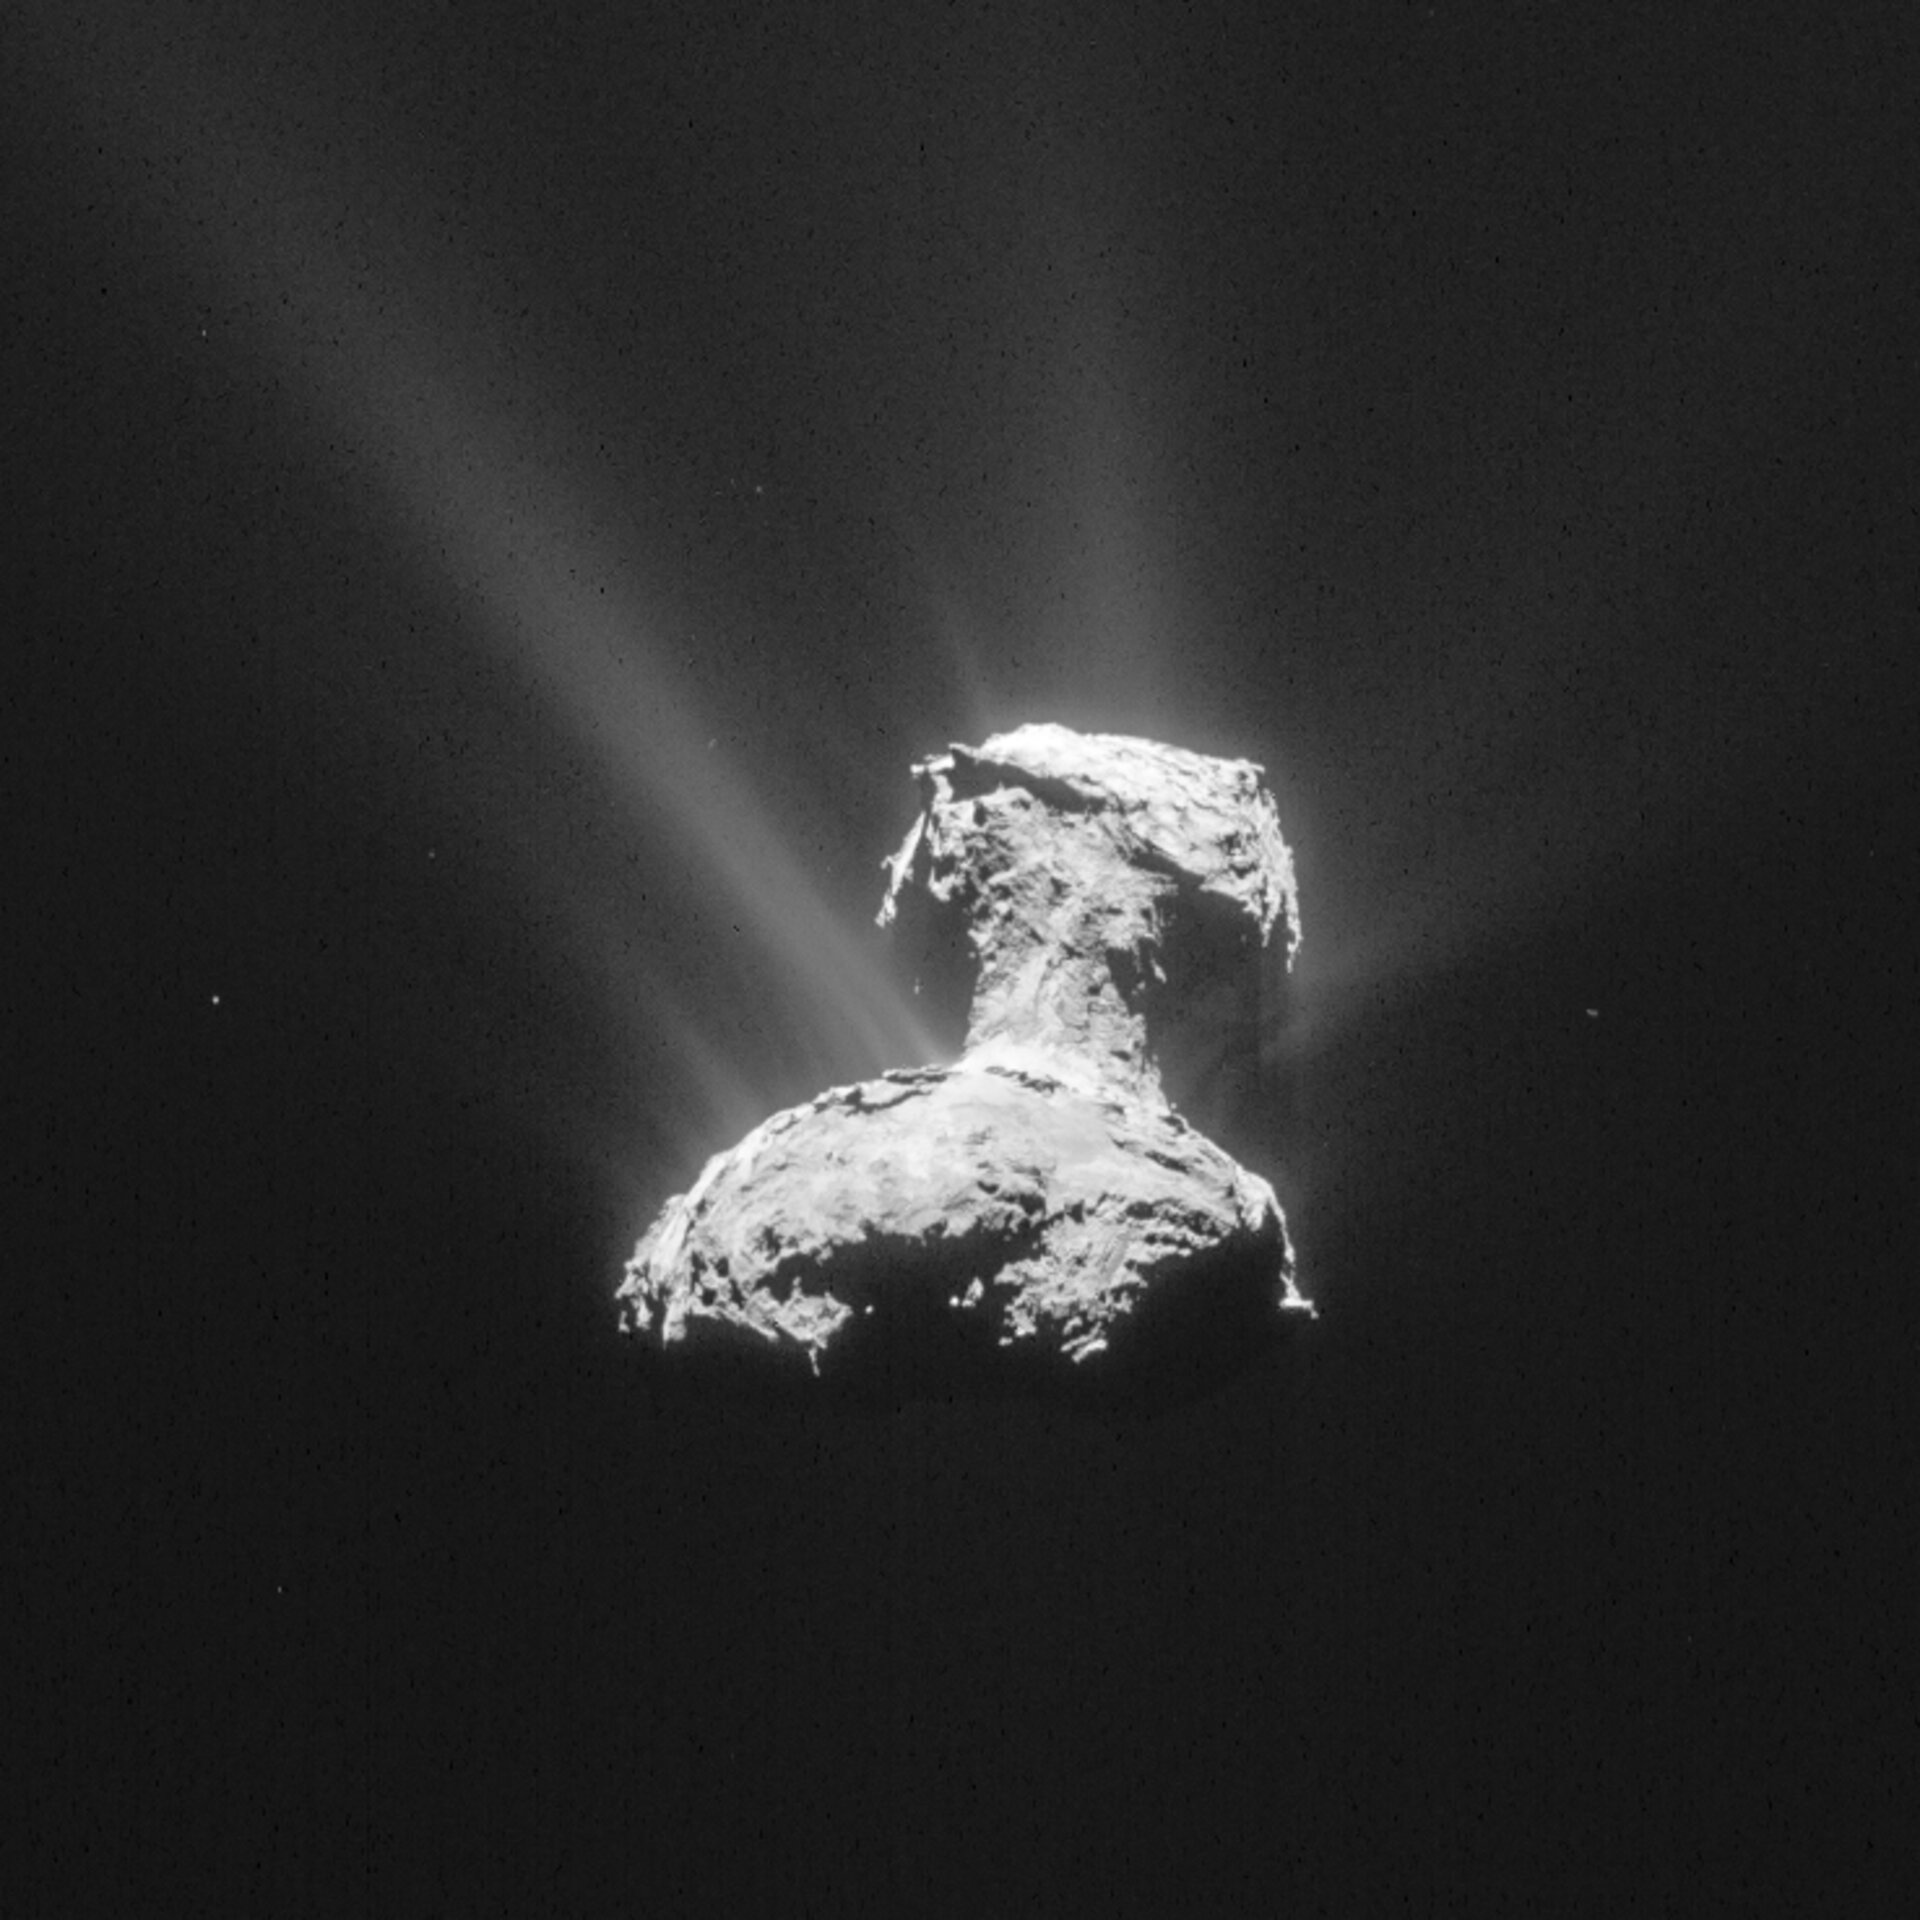 Comet on 15 April 2015 (b) – NavCam 